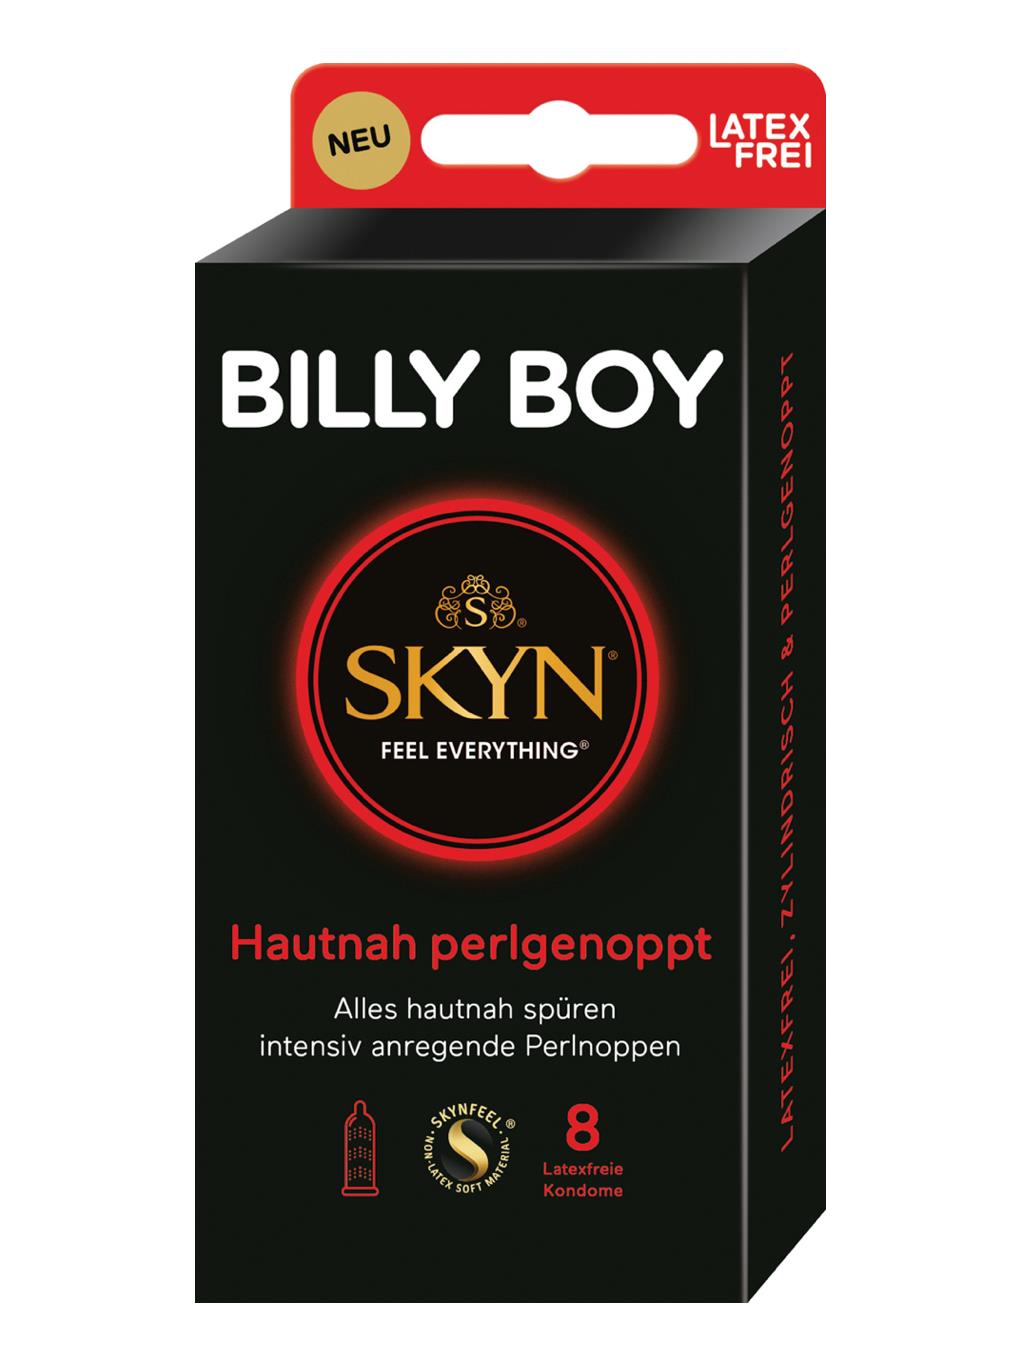 Billy Boy Skyn Extra Studded Latex Free - 8 Pack